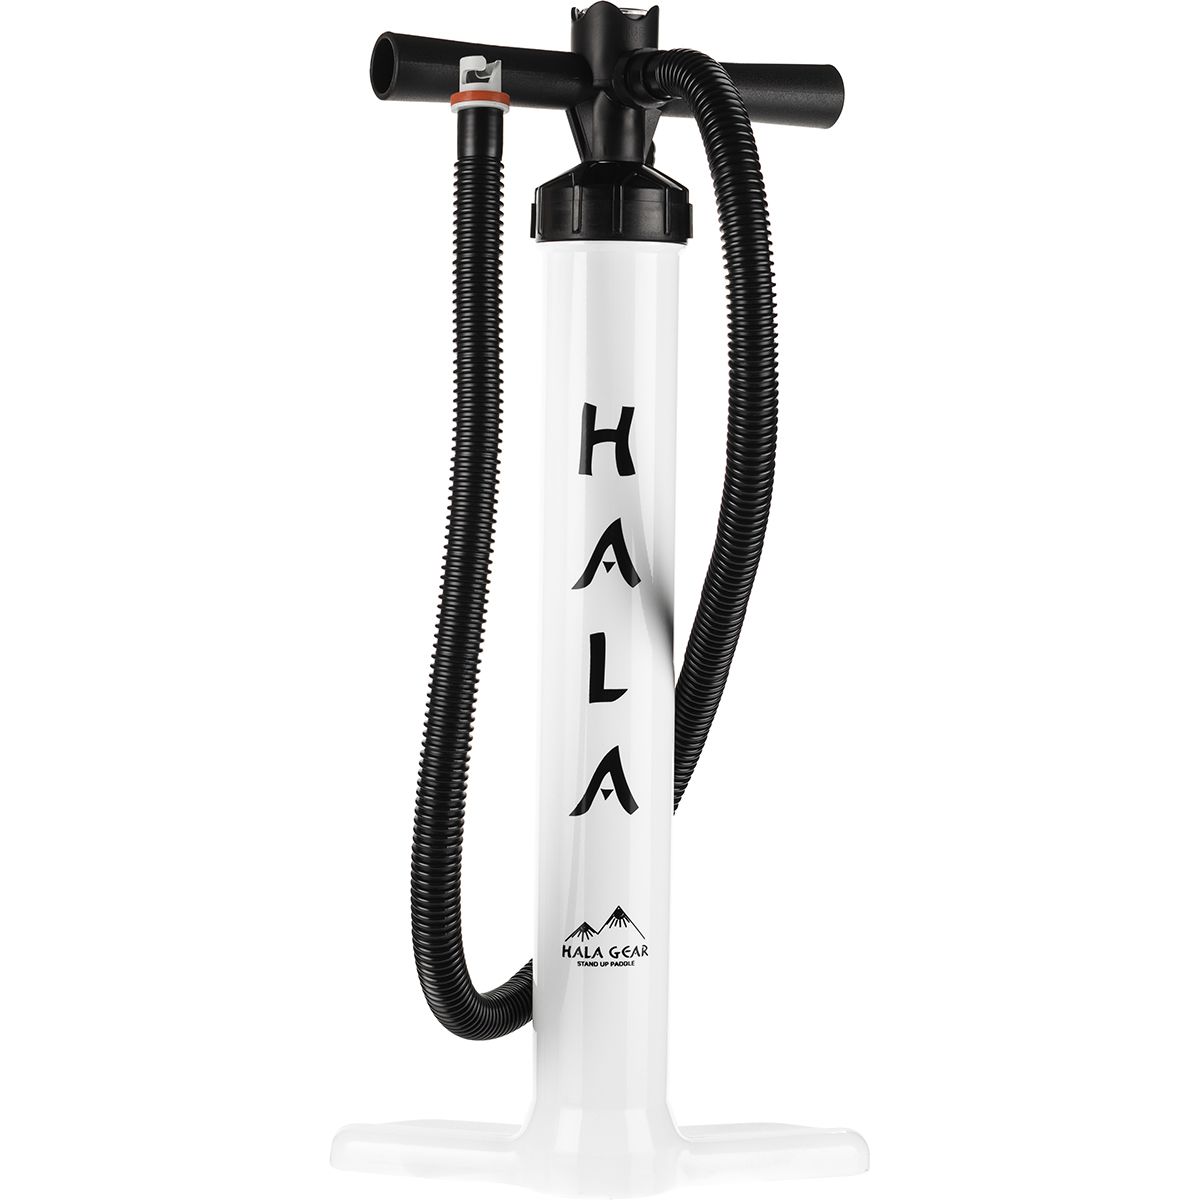 Hala Dual Action Hand Pump